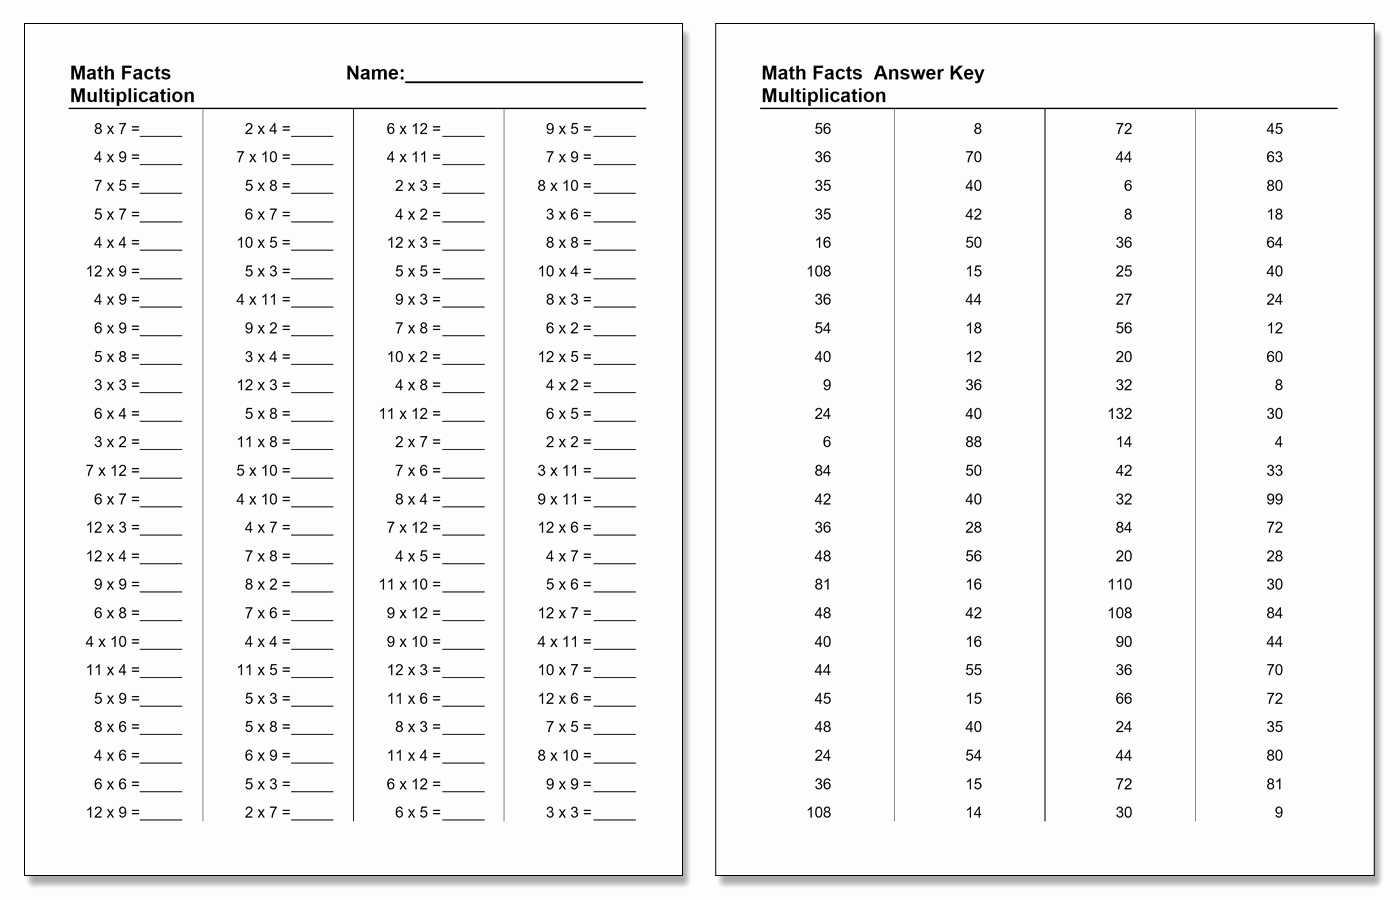 Multiplication Facts Worksheet Generator Unique Math Facts Worksheet Generator – Just Another Stephen